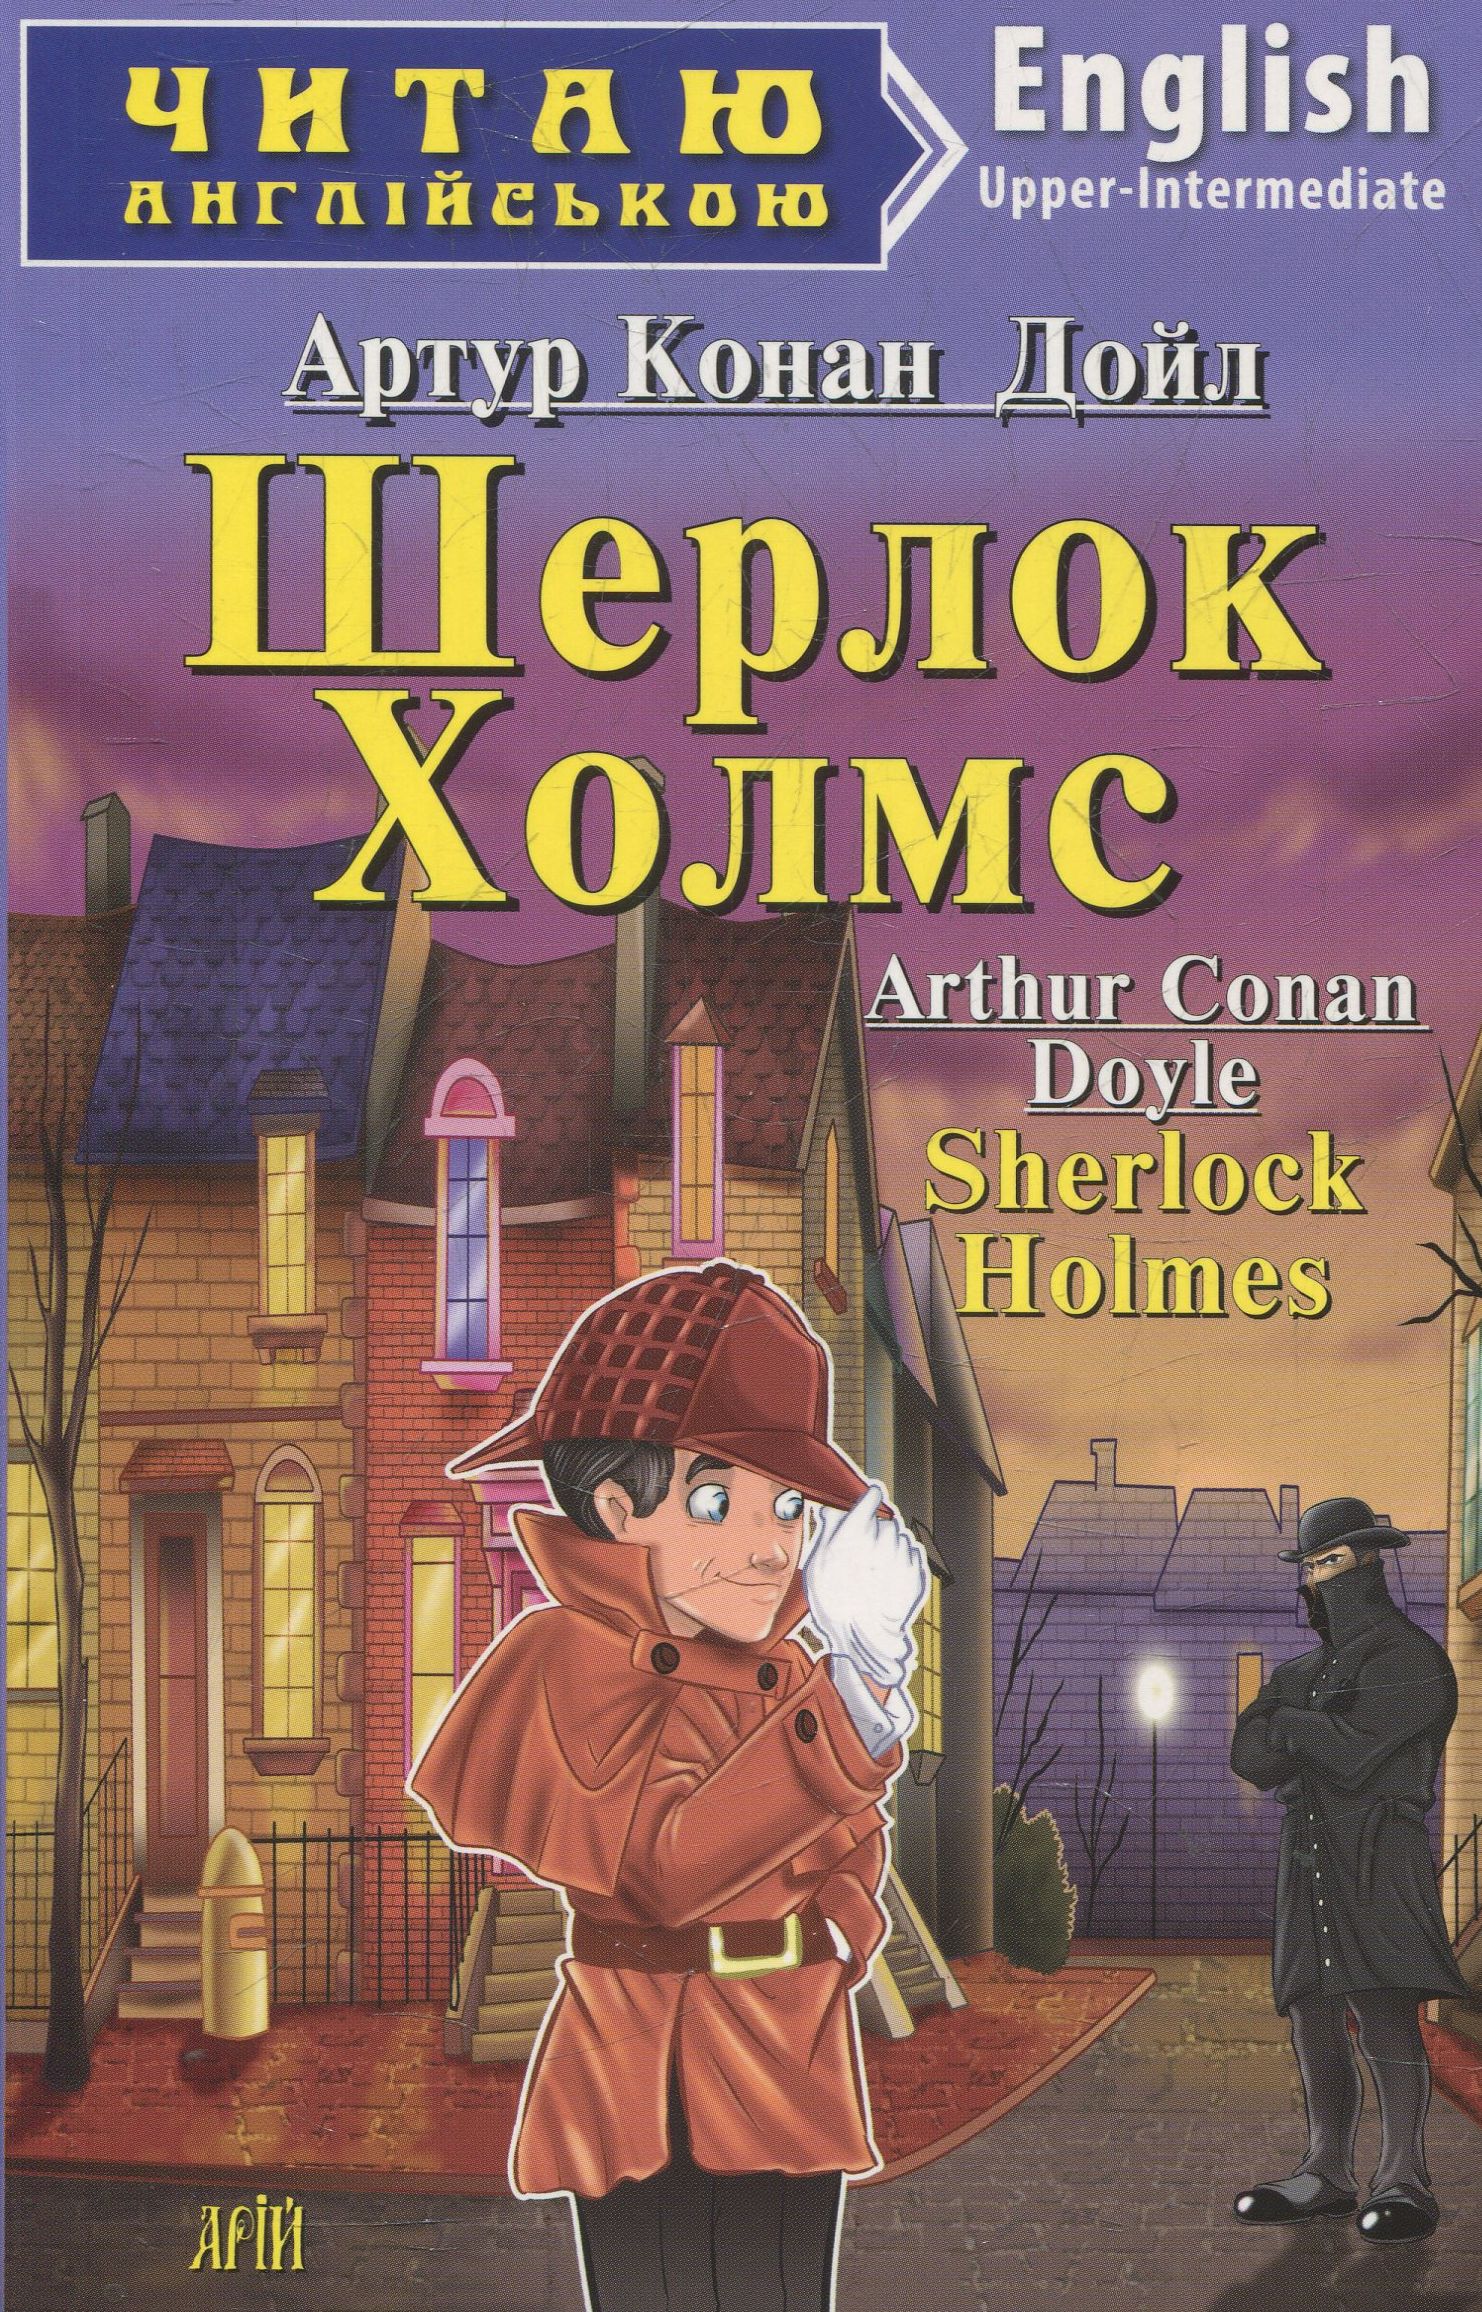 Холмс на английском читать. Книги на английском.